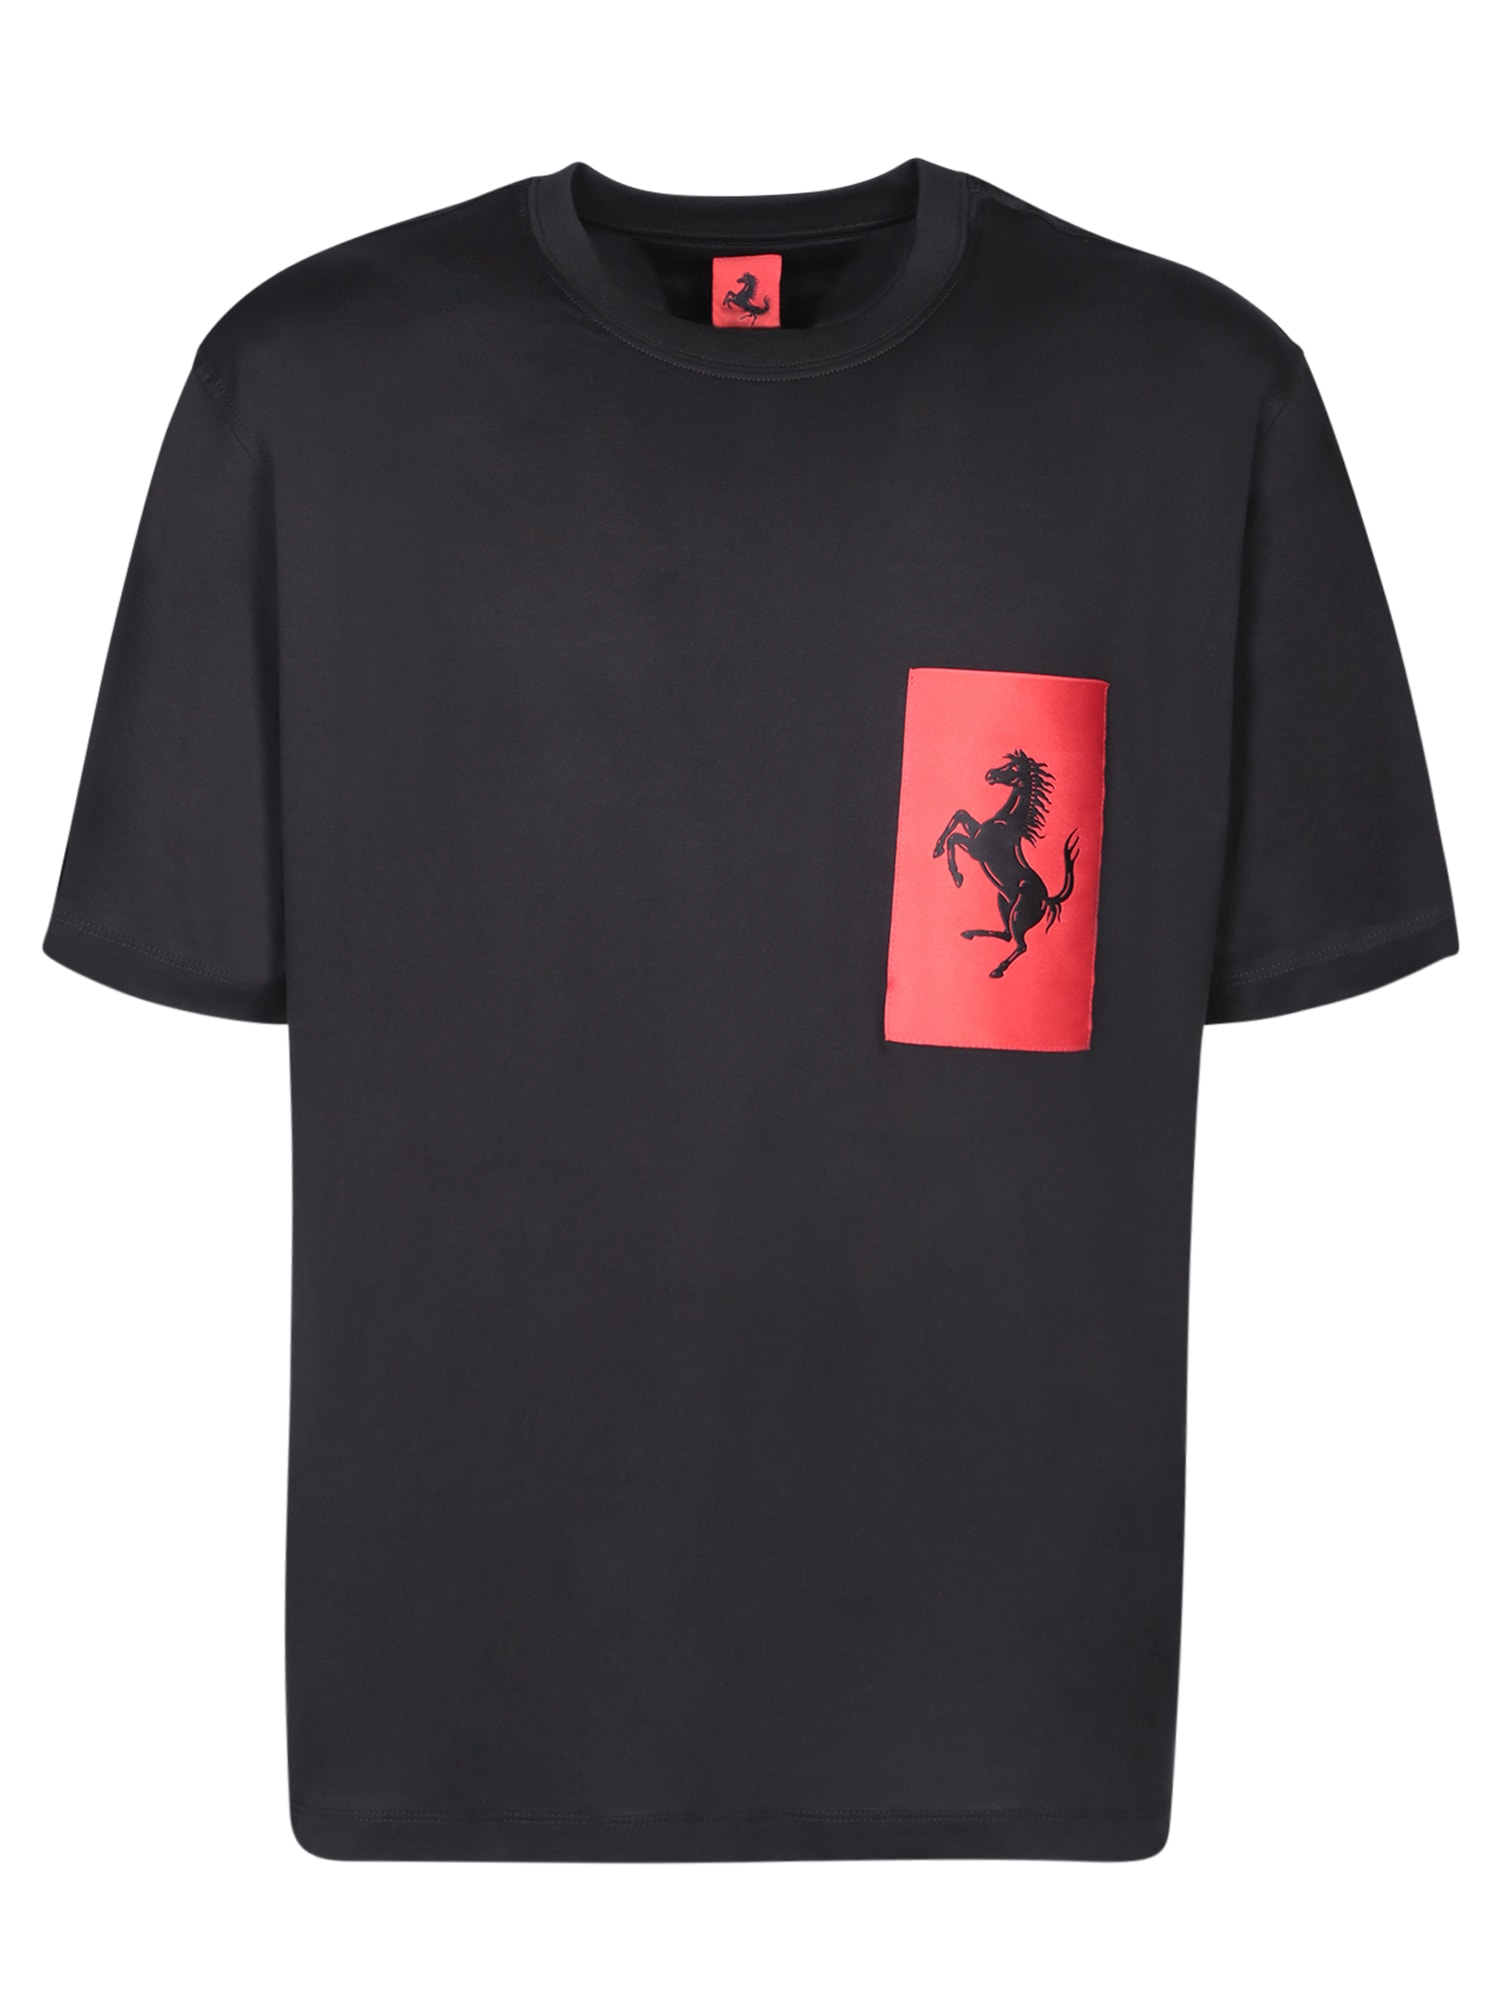 Cavallino Rampante Chest Black T-shirt